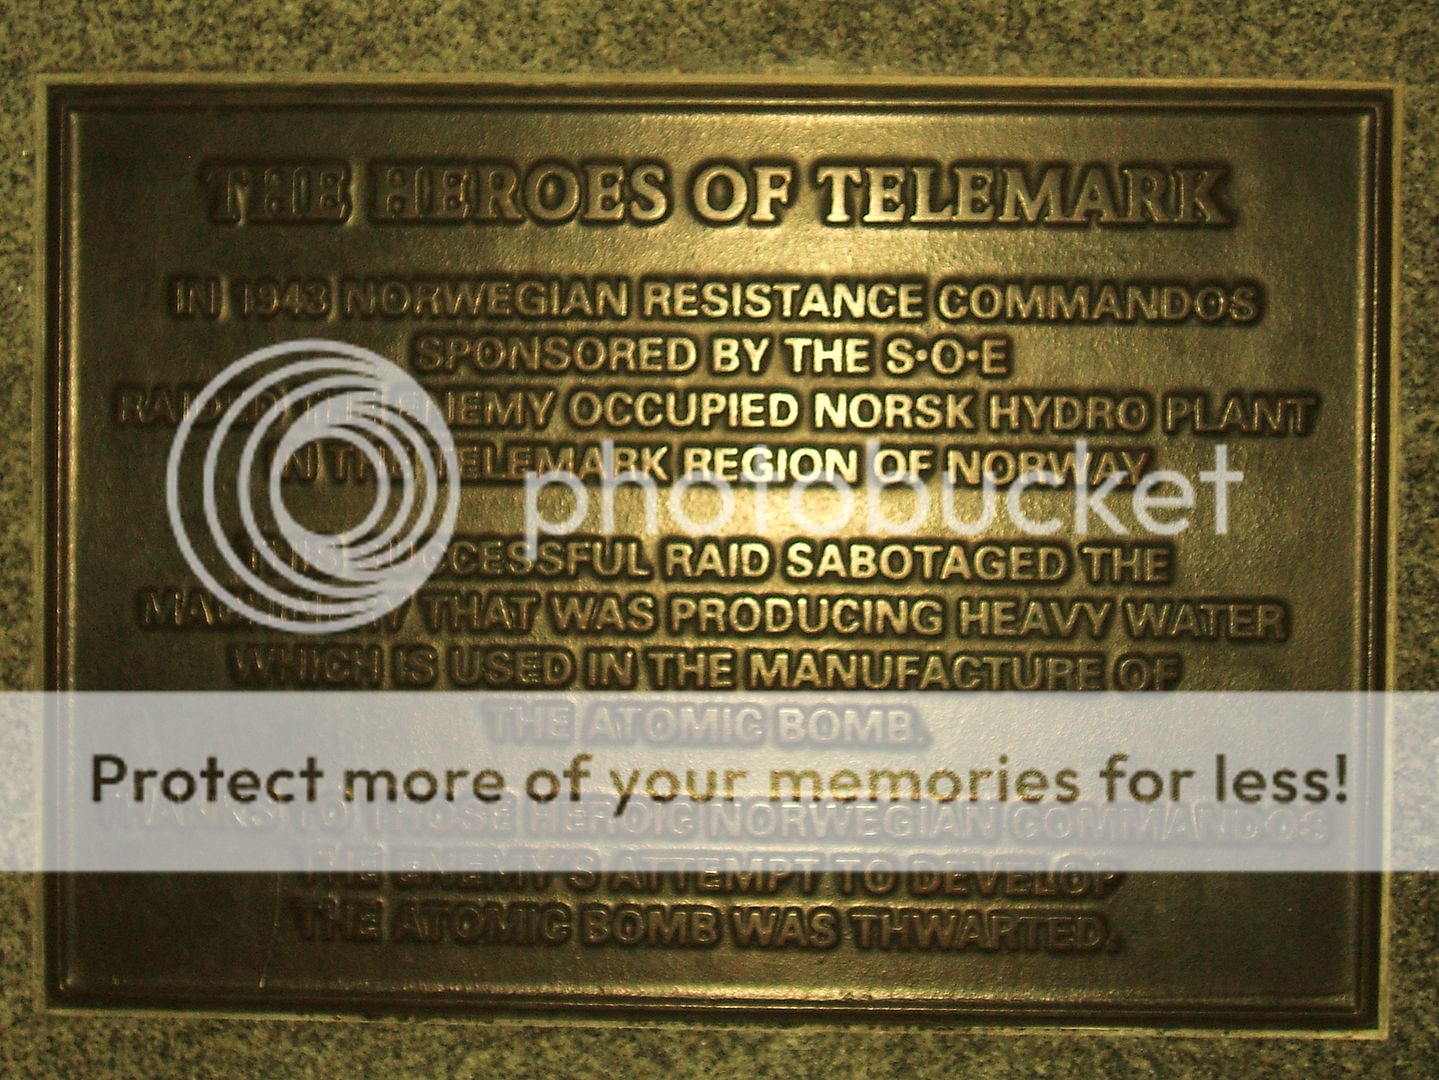 In Memoriam to the Fallen.. TelemarkMEMORIAL